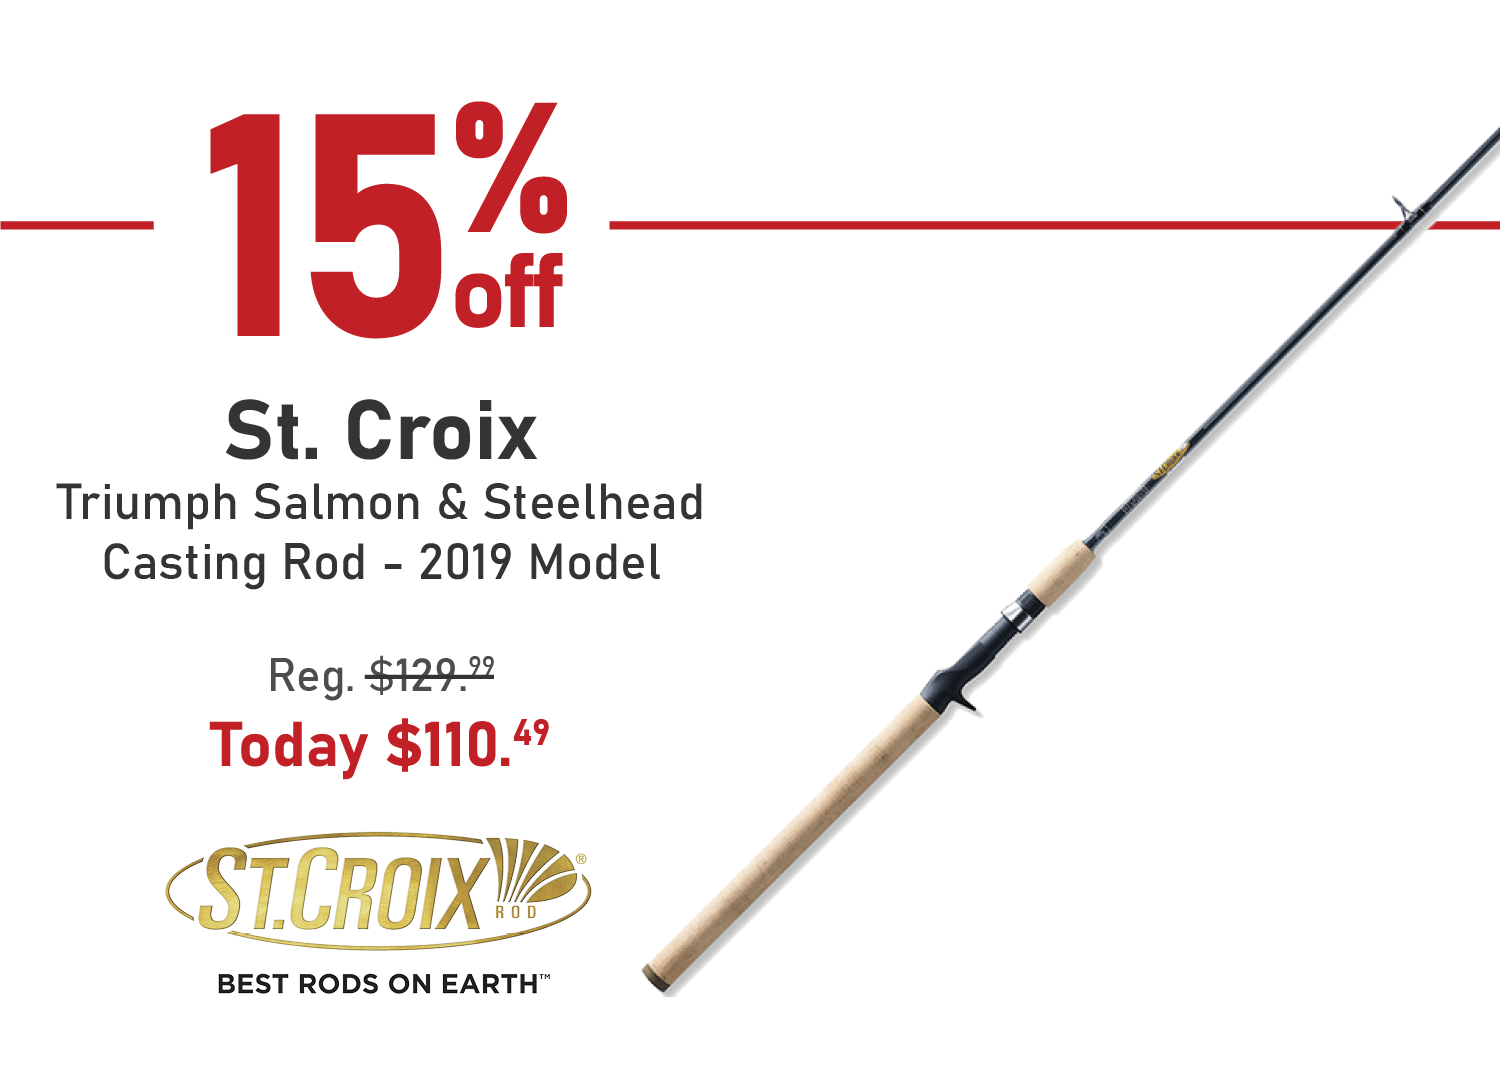 Save 15% on the St. Croix Triumph Salmon & Steelhead Casting Rod - 2019 Model